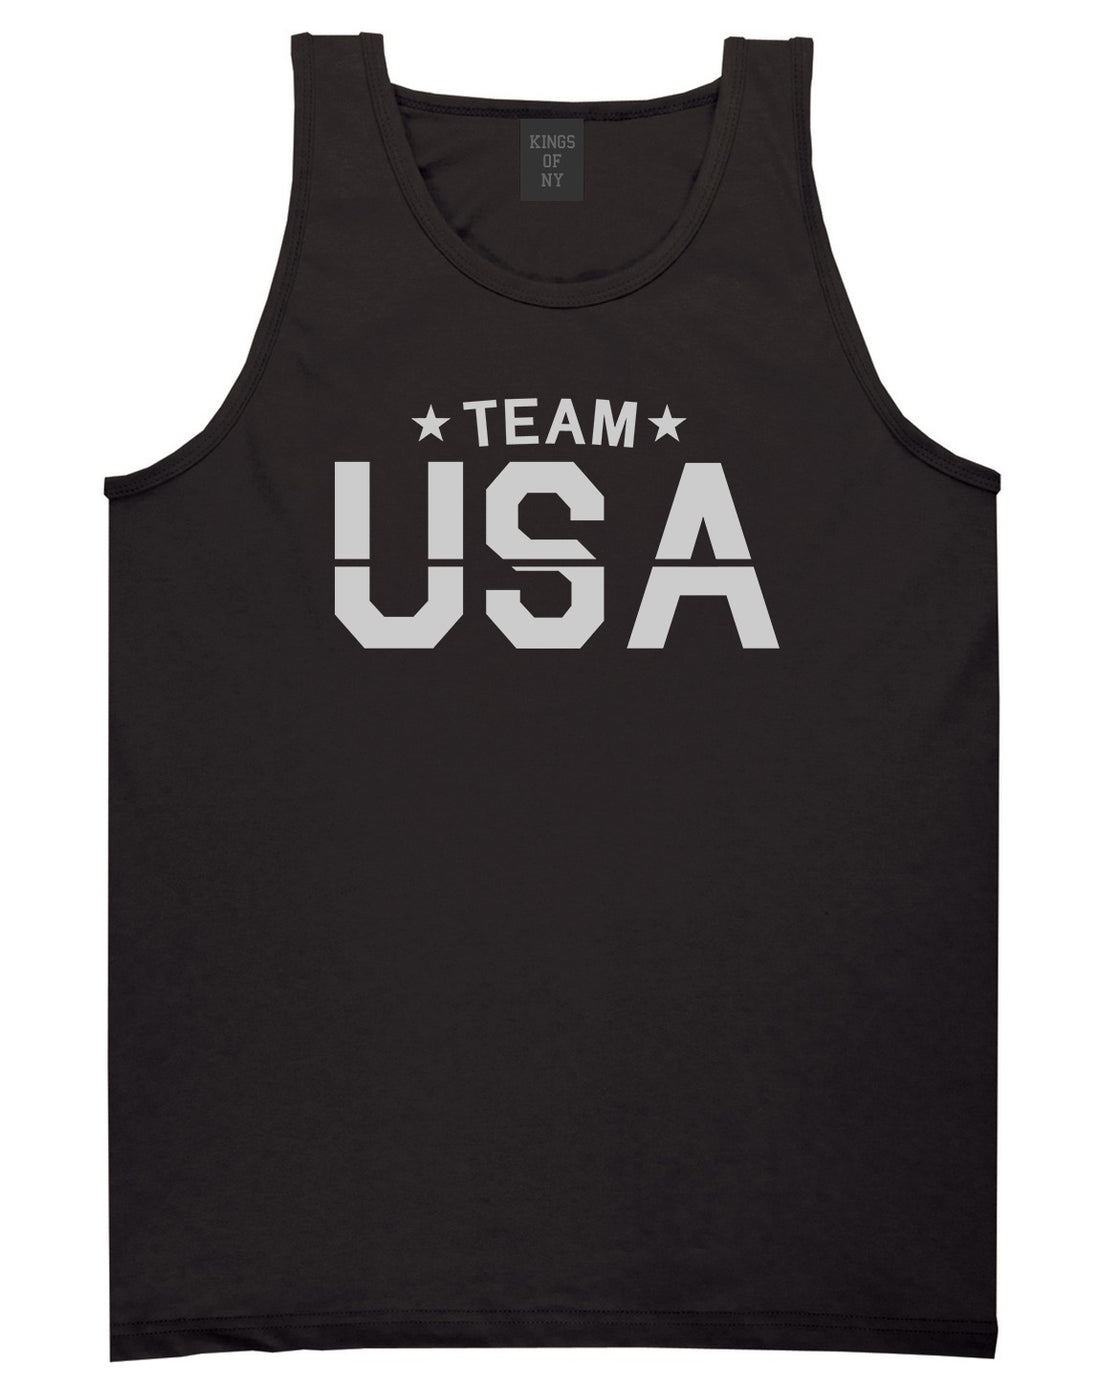 Team USA Mens Tank Top Shirt Black by Kings Of NY